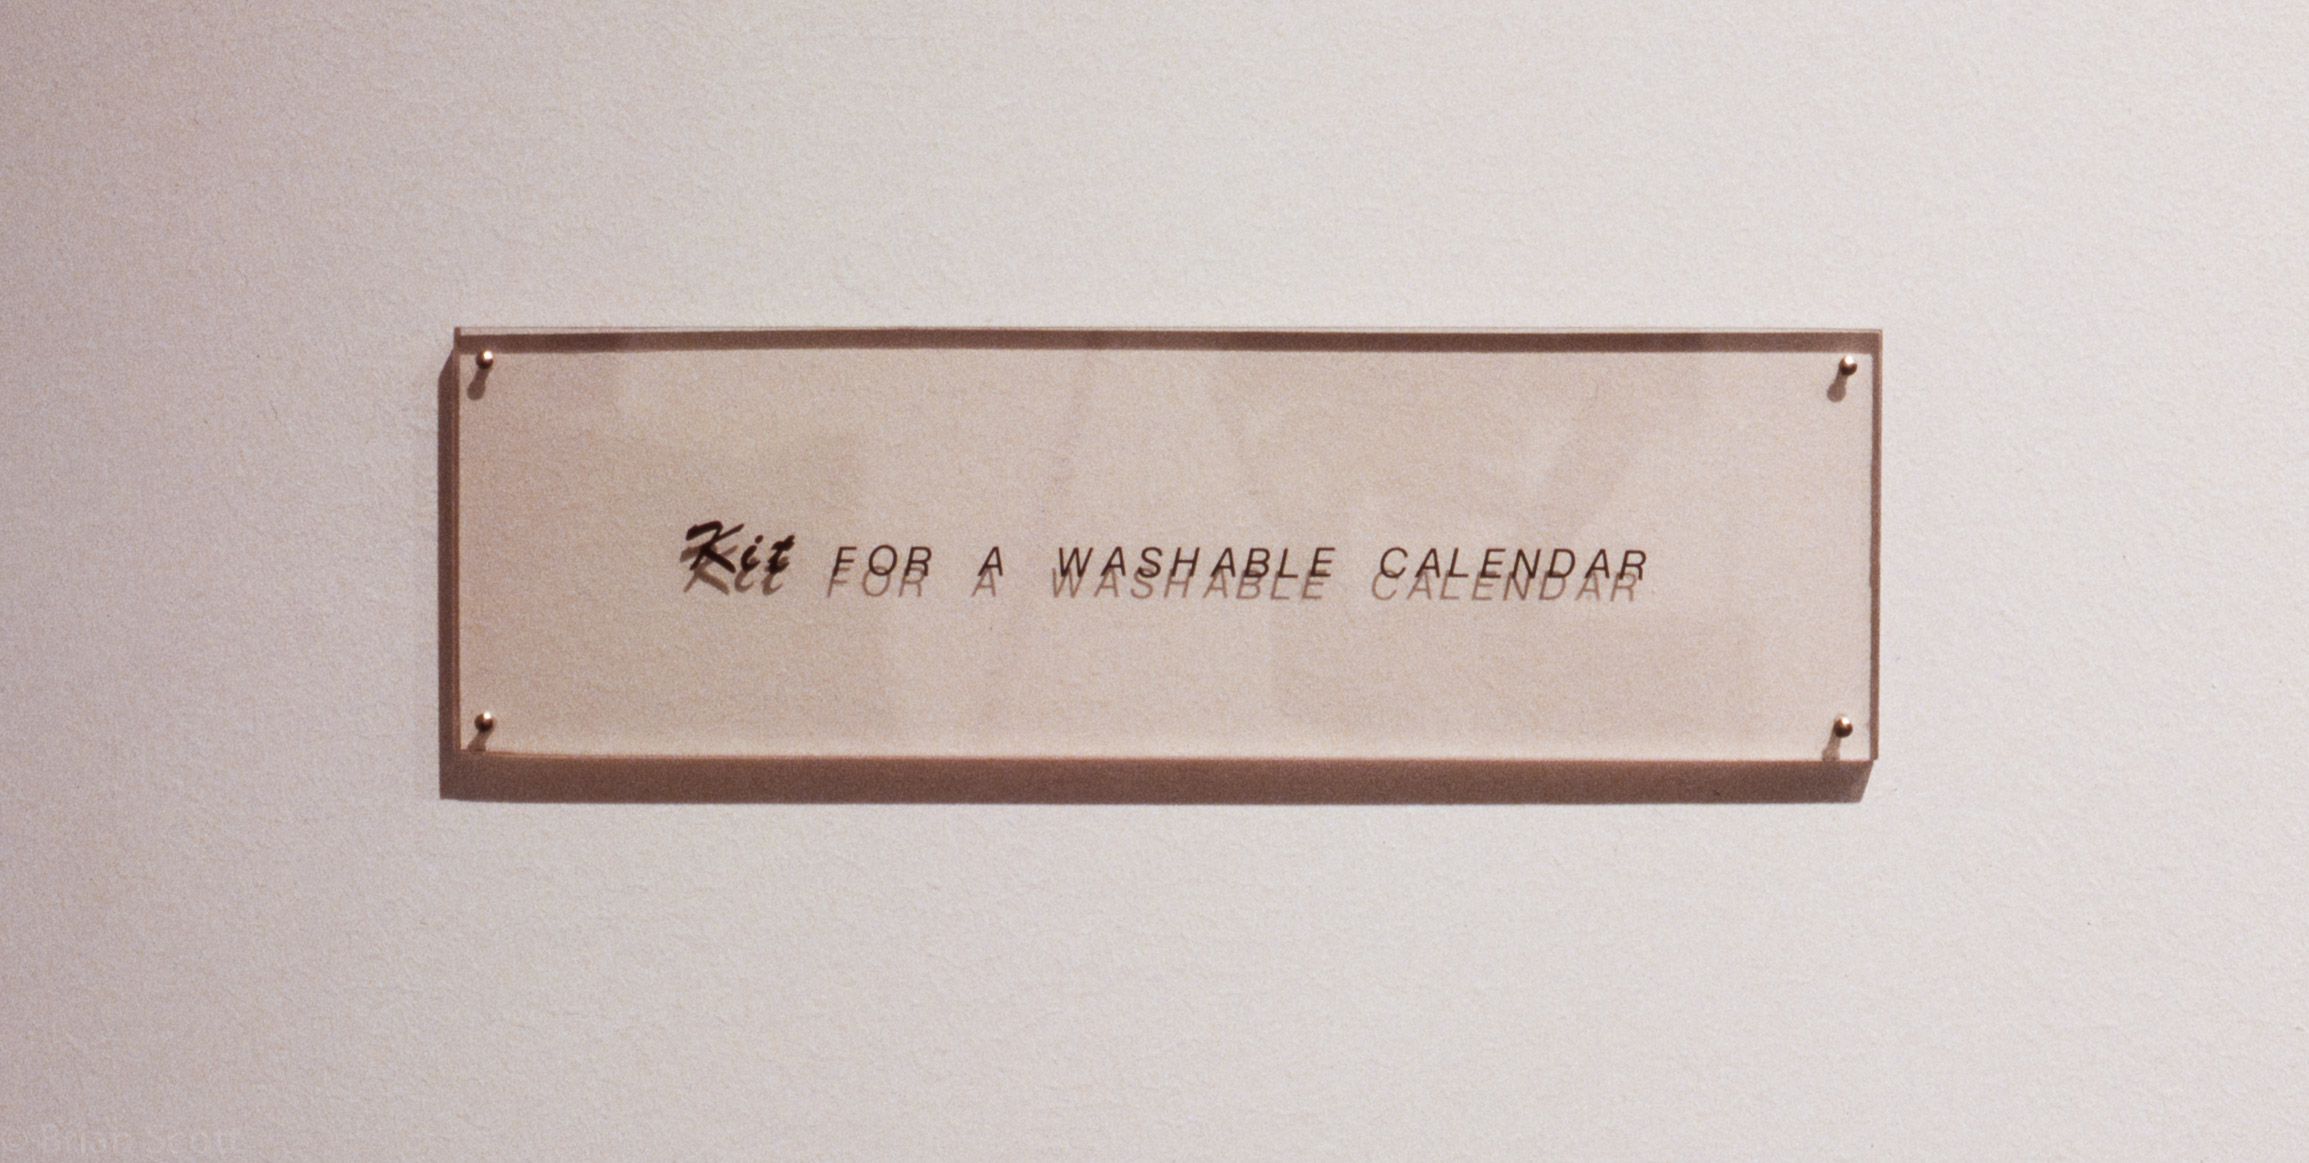 Kit for a washable calendar